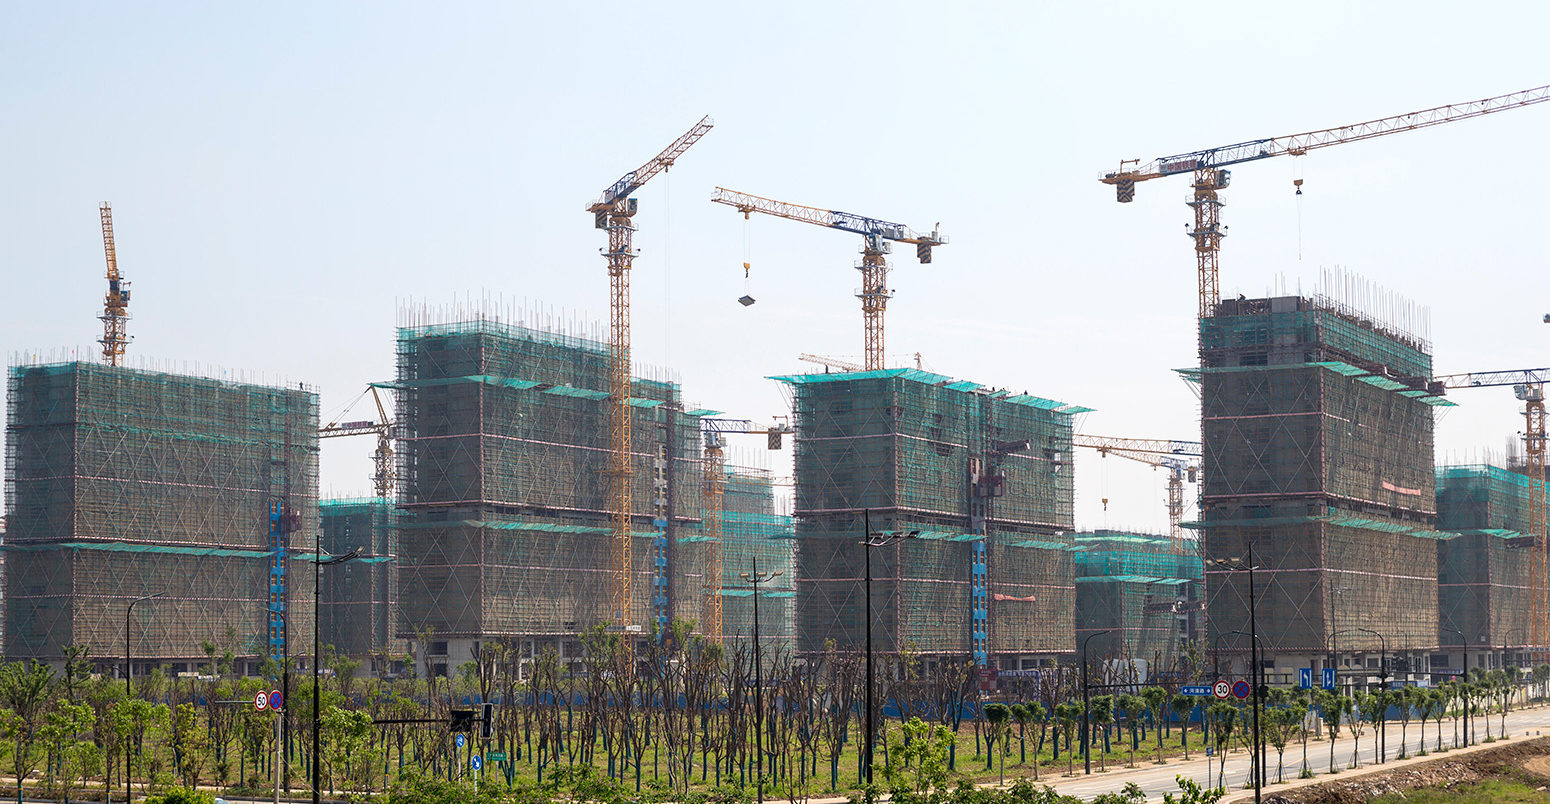 New apartments under construction in Yangzhou, Jiangsu, China. Credit: Charles O. Cecil / Alamy Stock Photo.